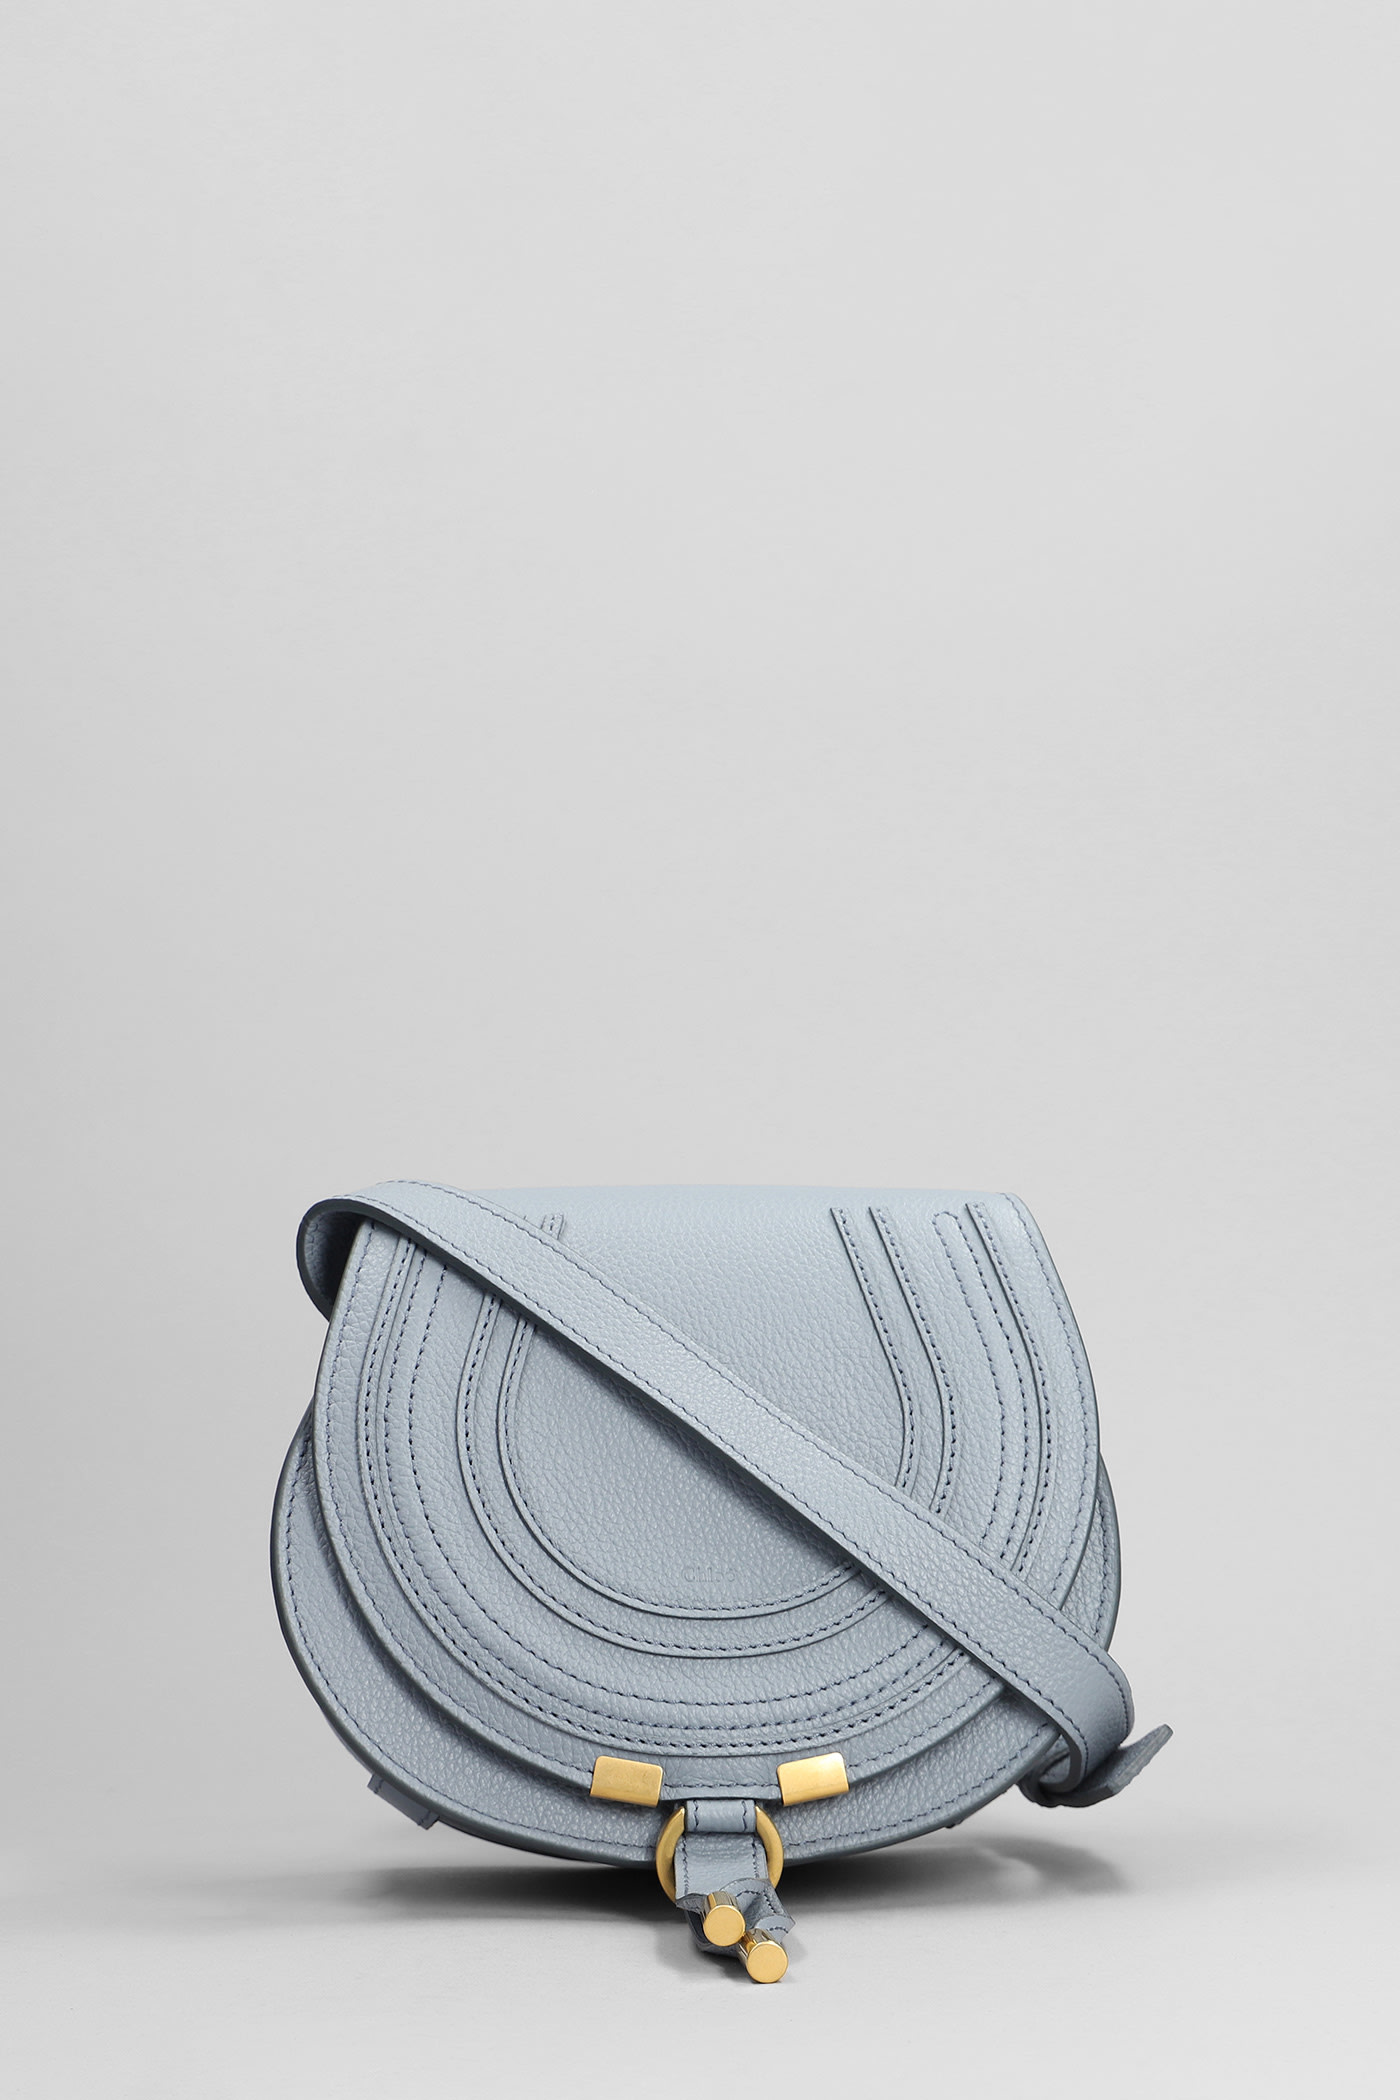 Chloé Mercie Shoulder Bag In Cyan Leather